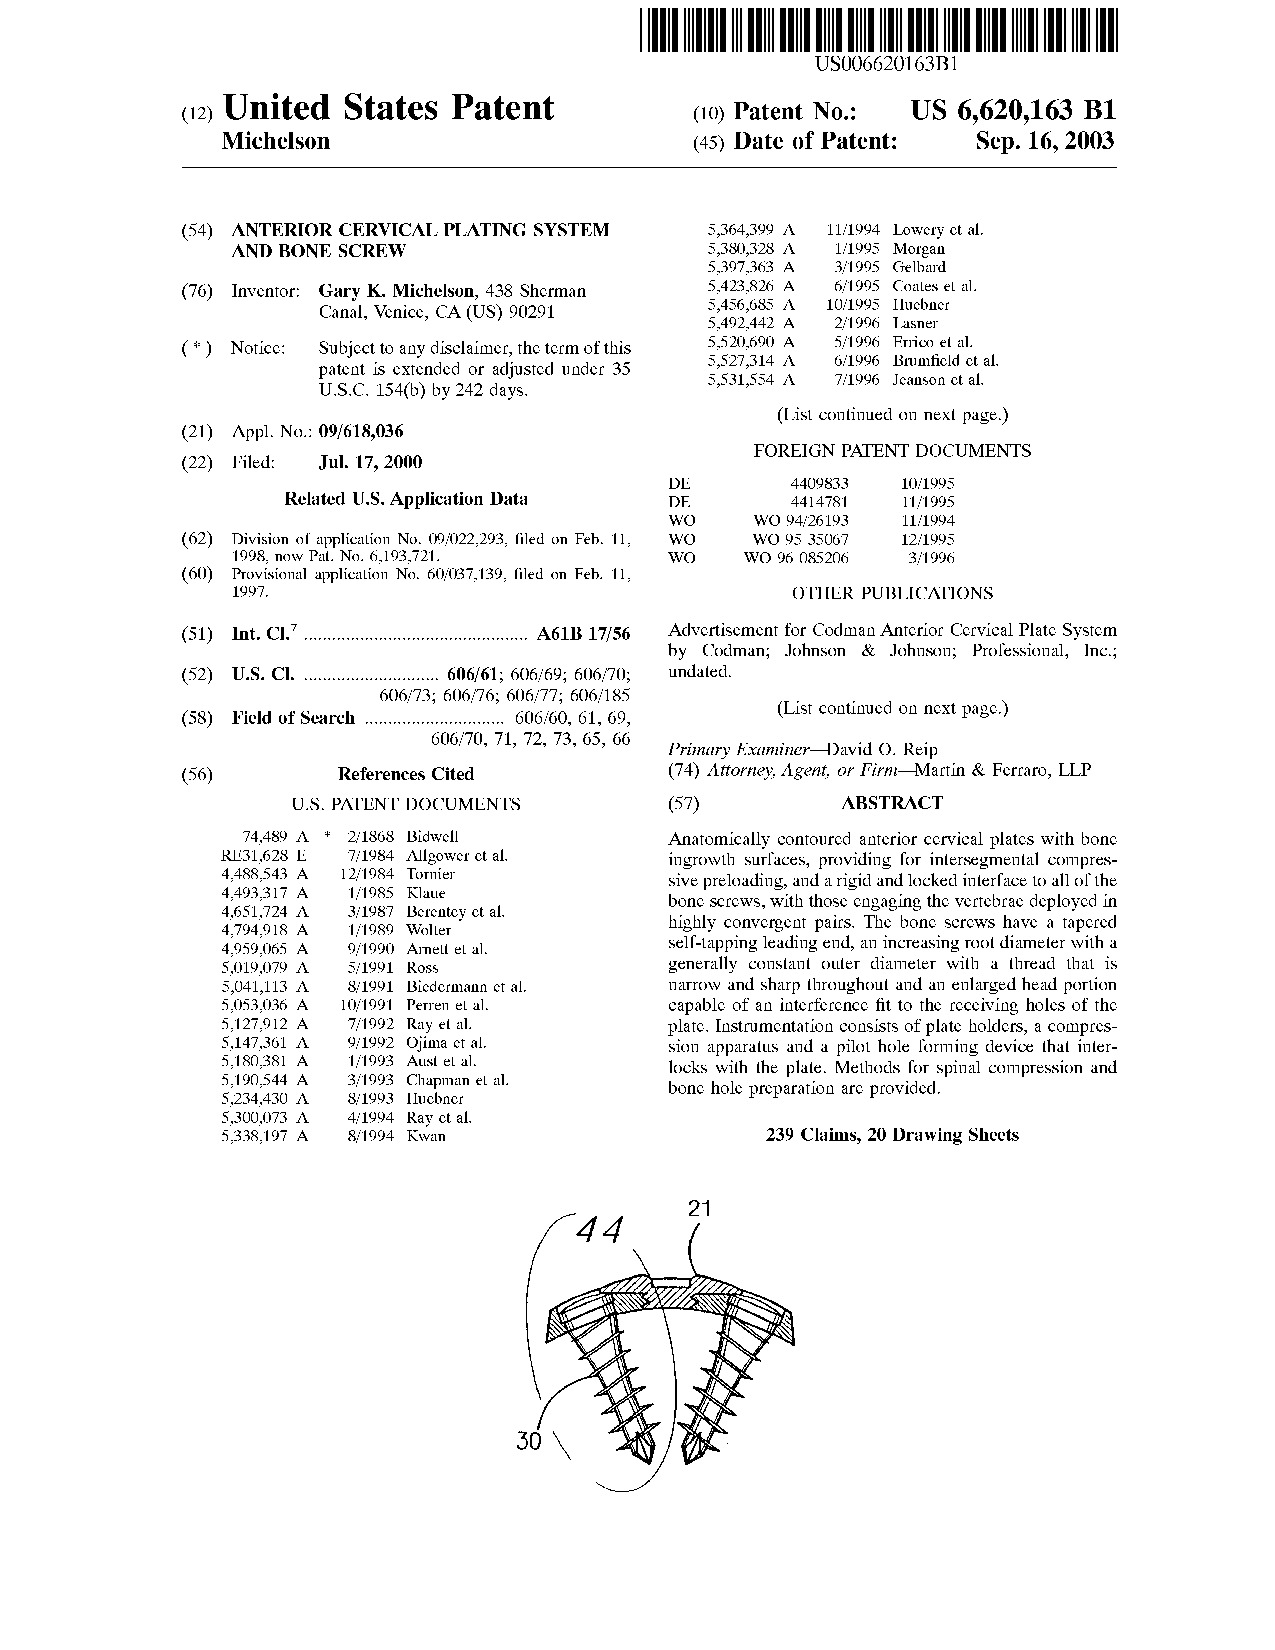 Anterior cervical plating system and bone screw - Patent 6,620,163